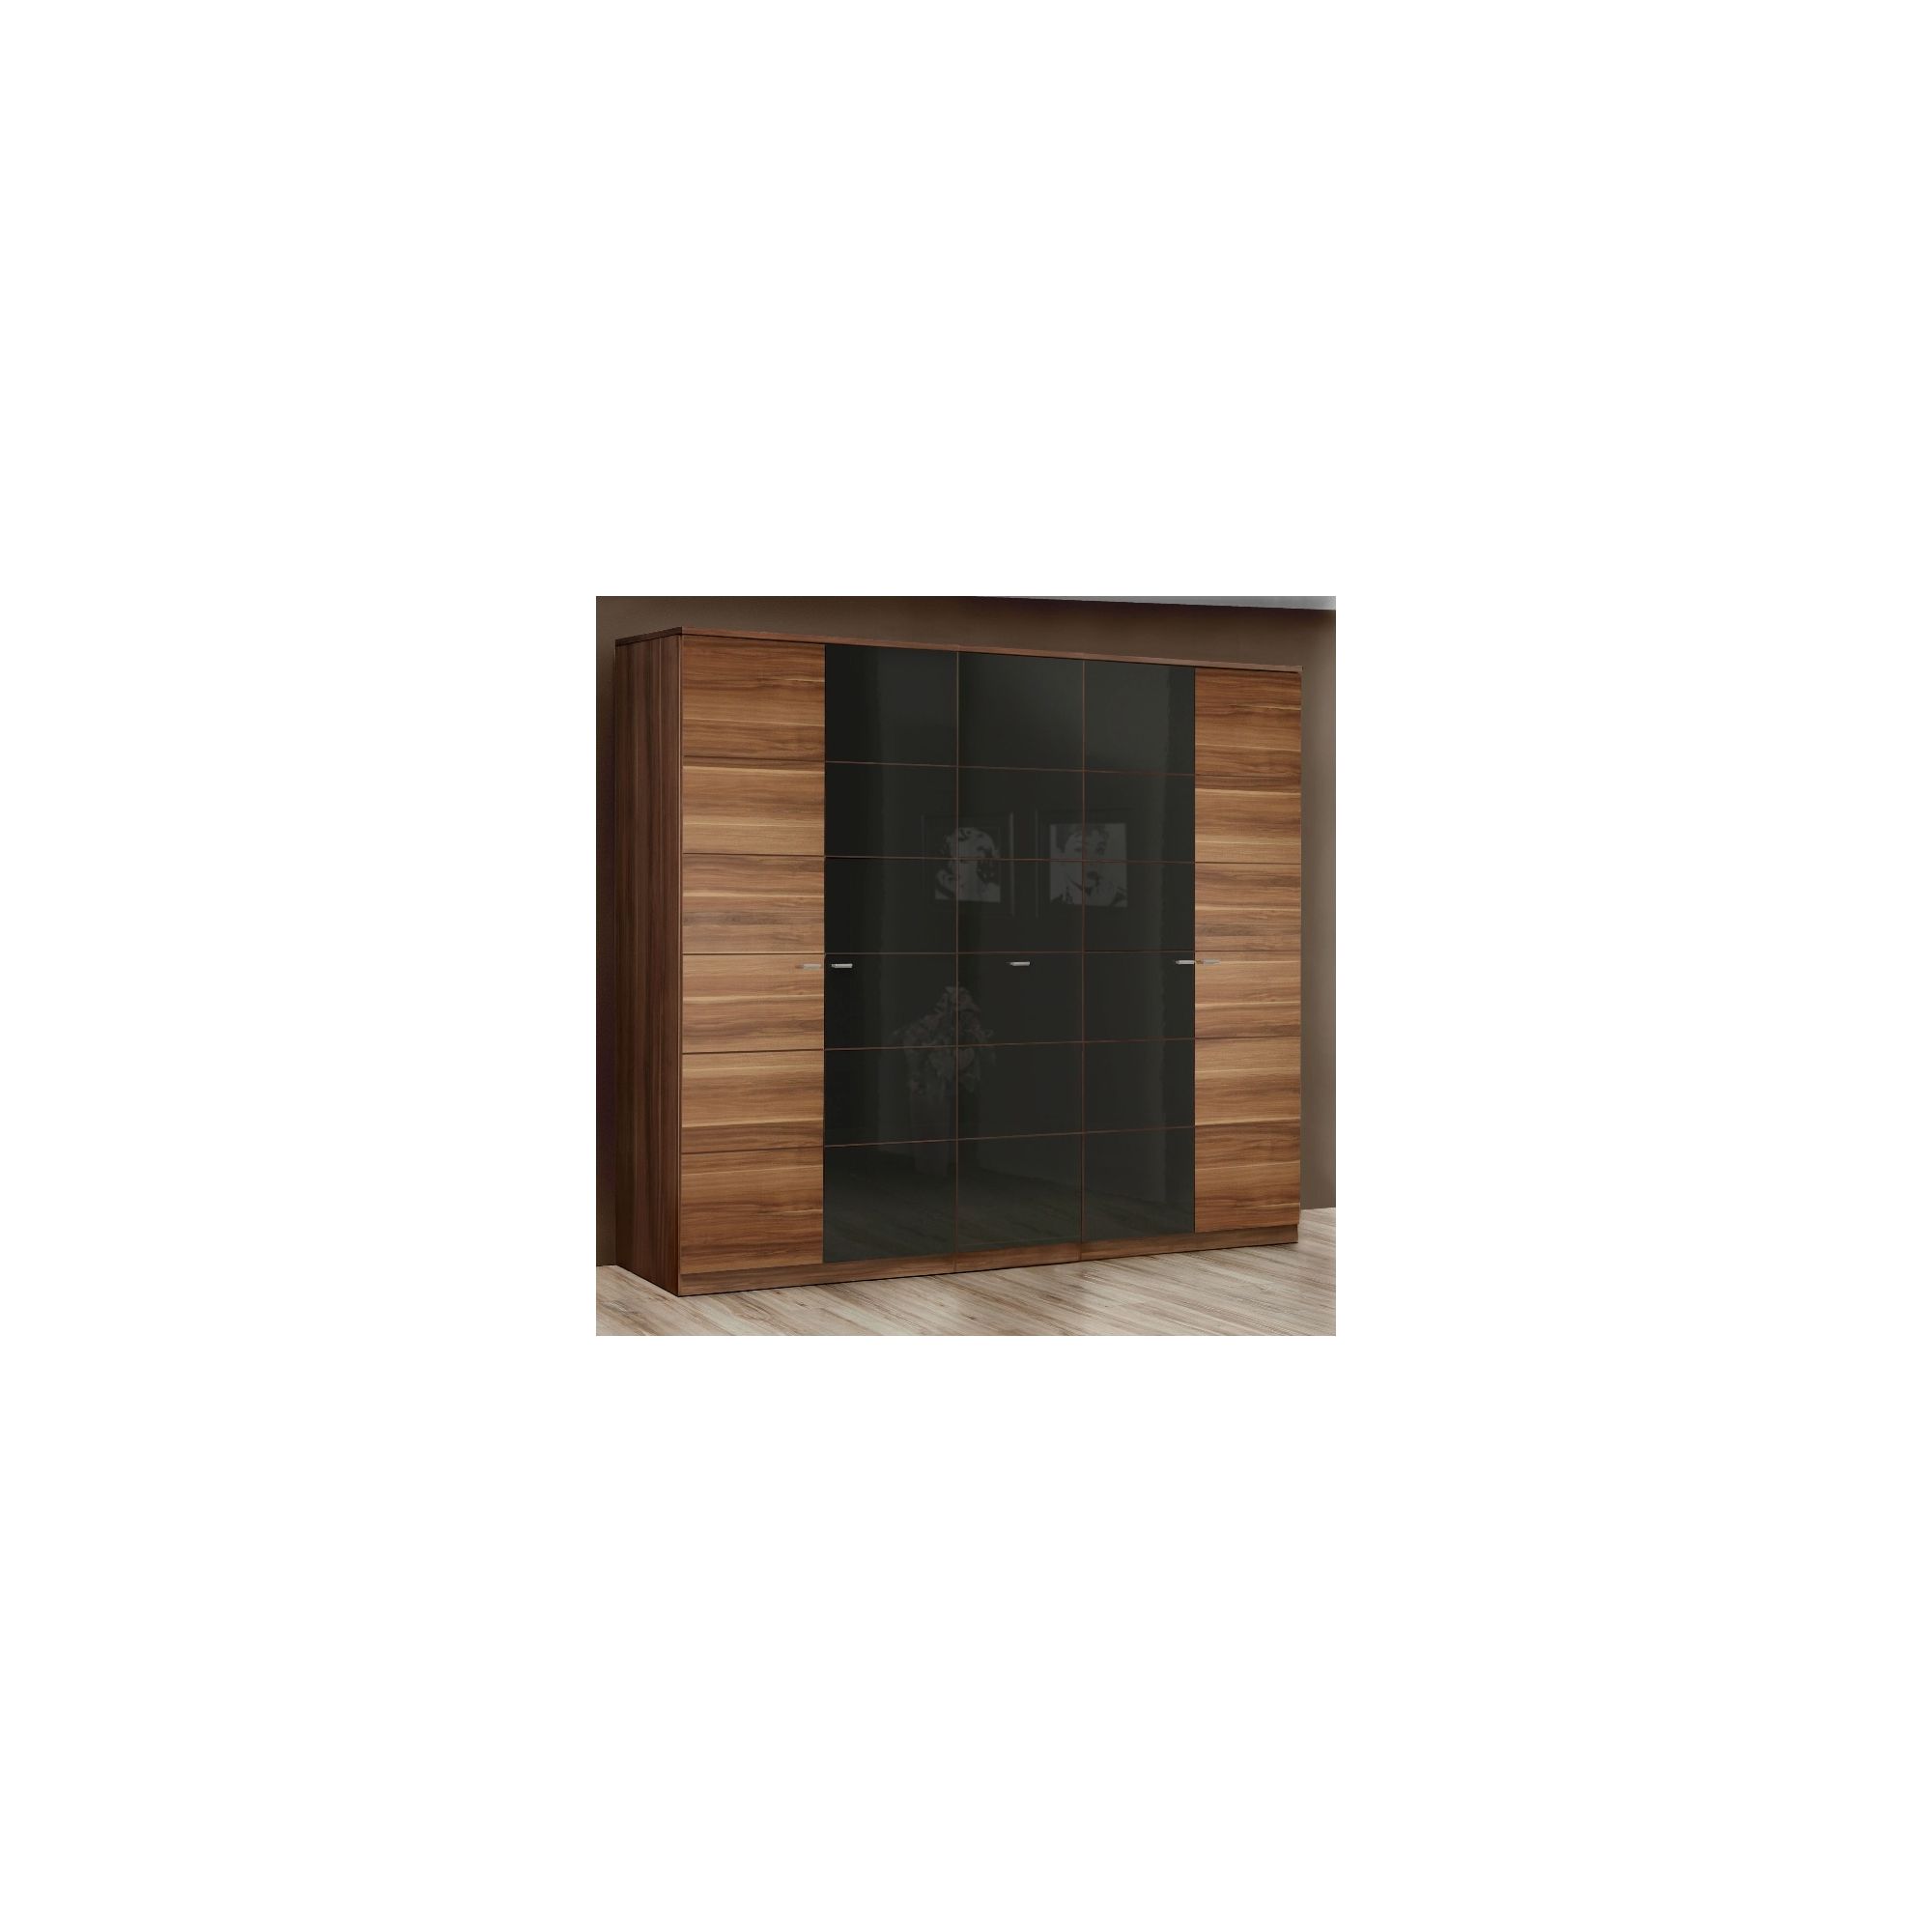 Amos Mann furniture Valencia 5 Door Wardrobe - Black at Tesco Direct